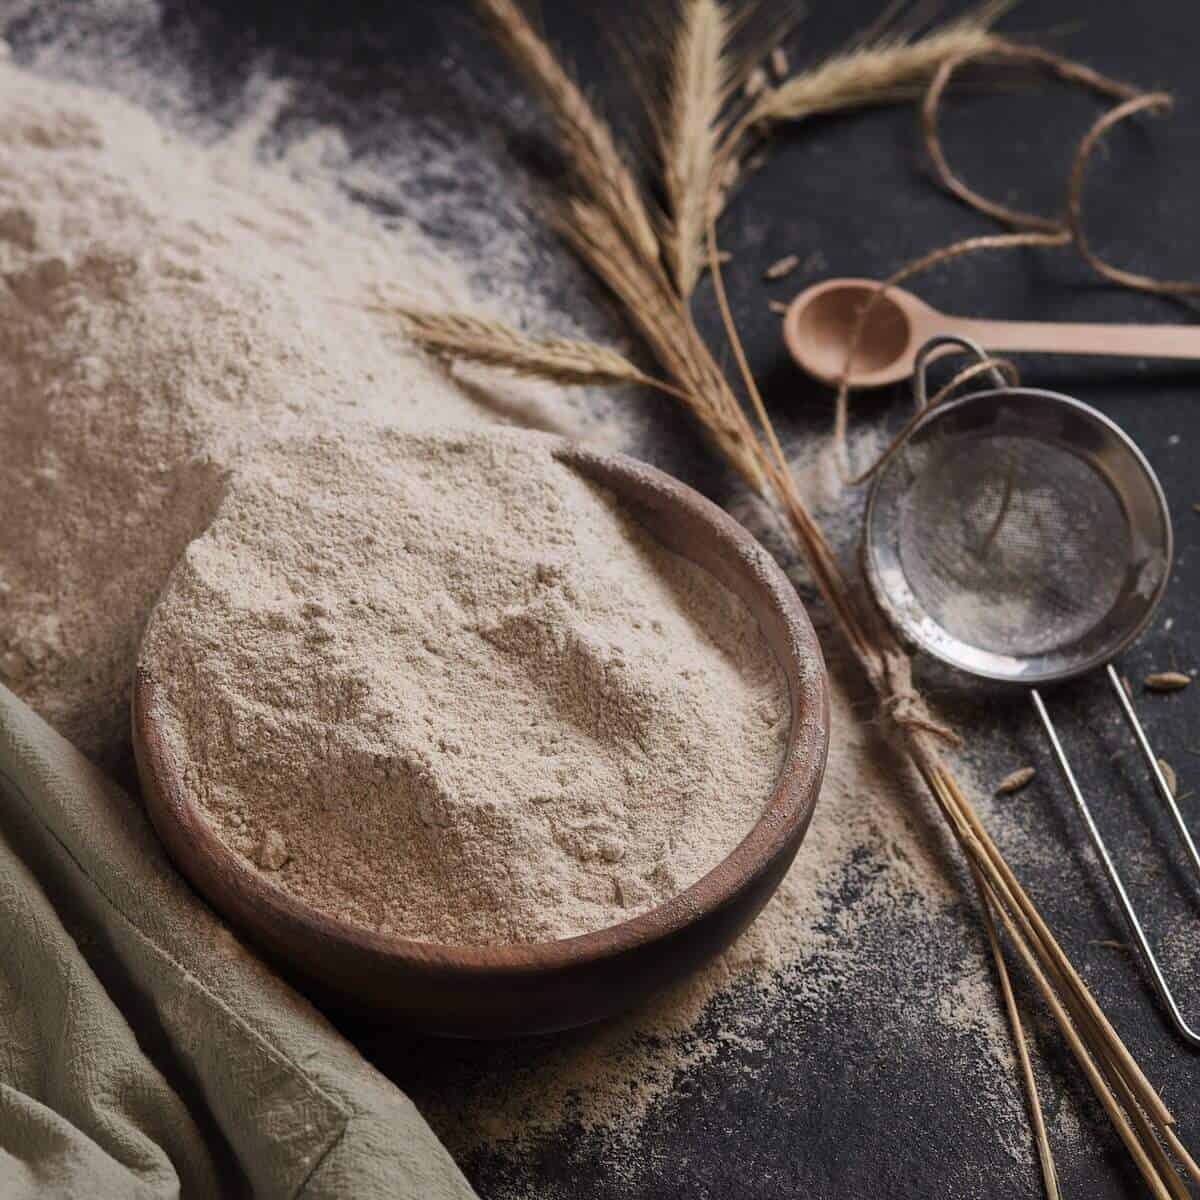 rye flour